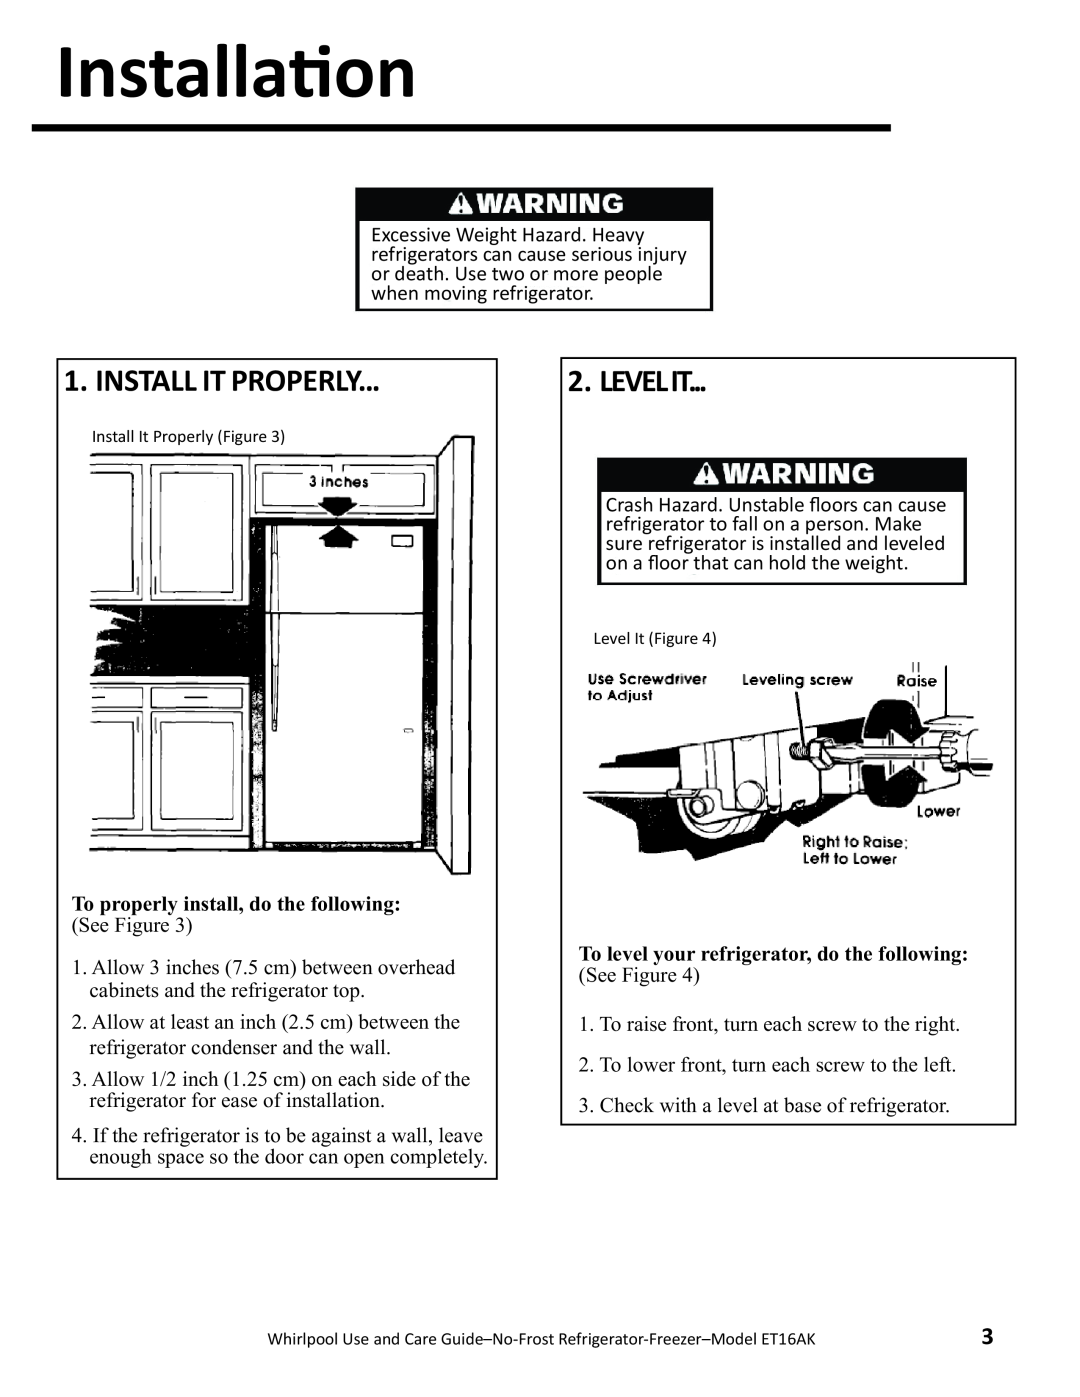 Whirlpool ET16AK manual Installa/on, Install It Properly, Levelit 